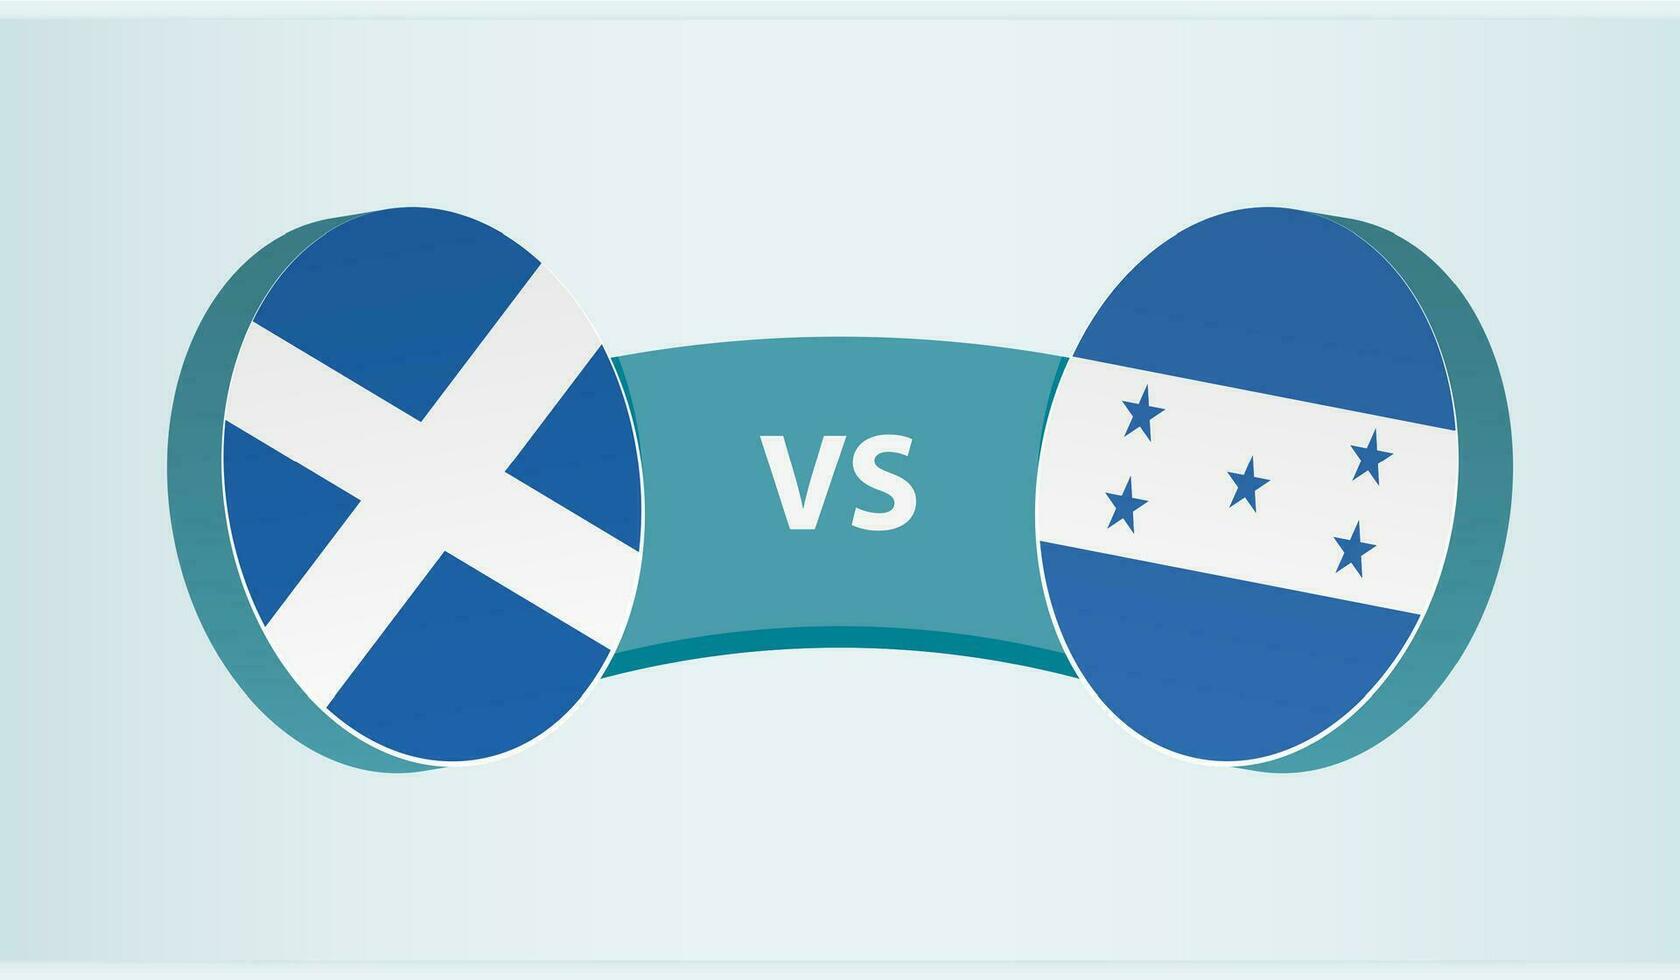 Scotland versus Honduras, team sports competition concept. vector